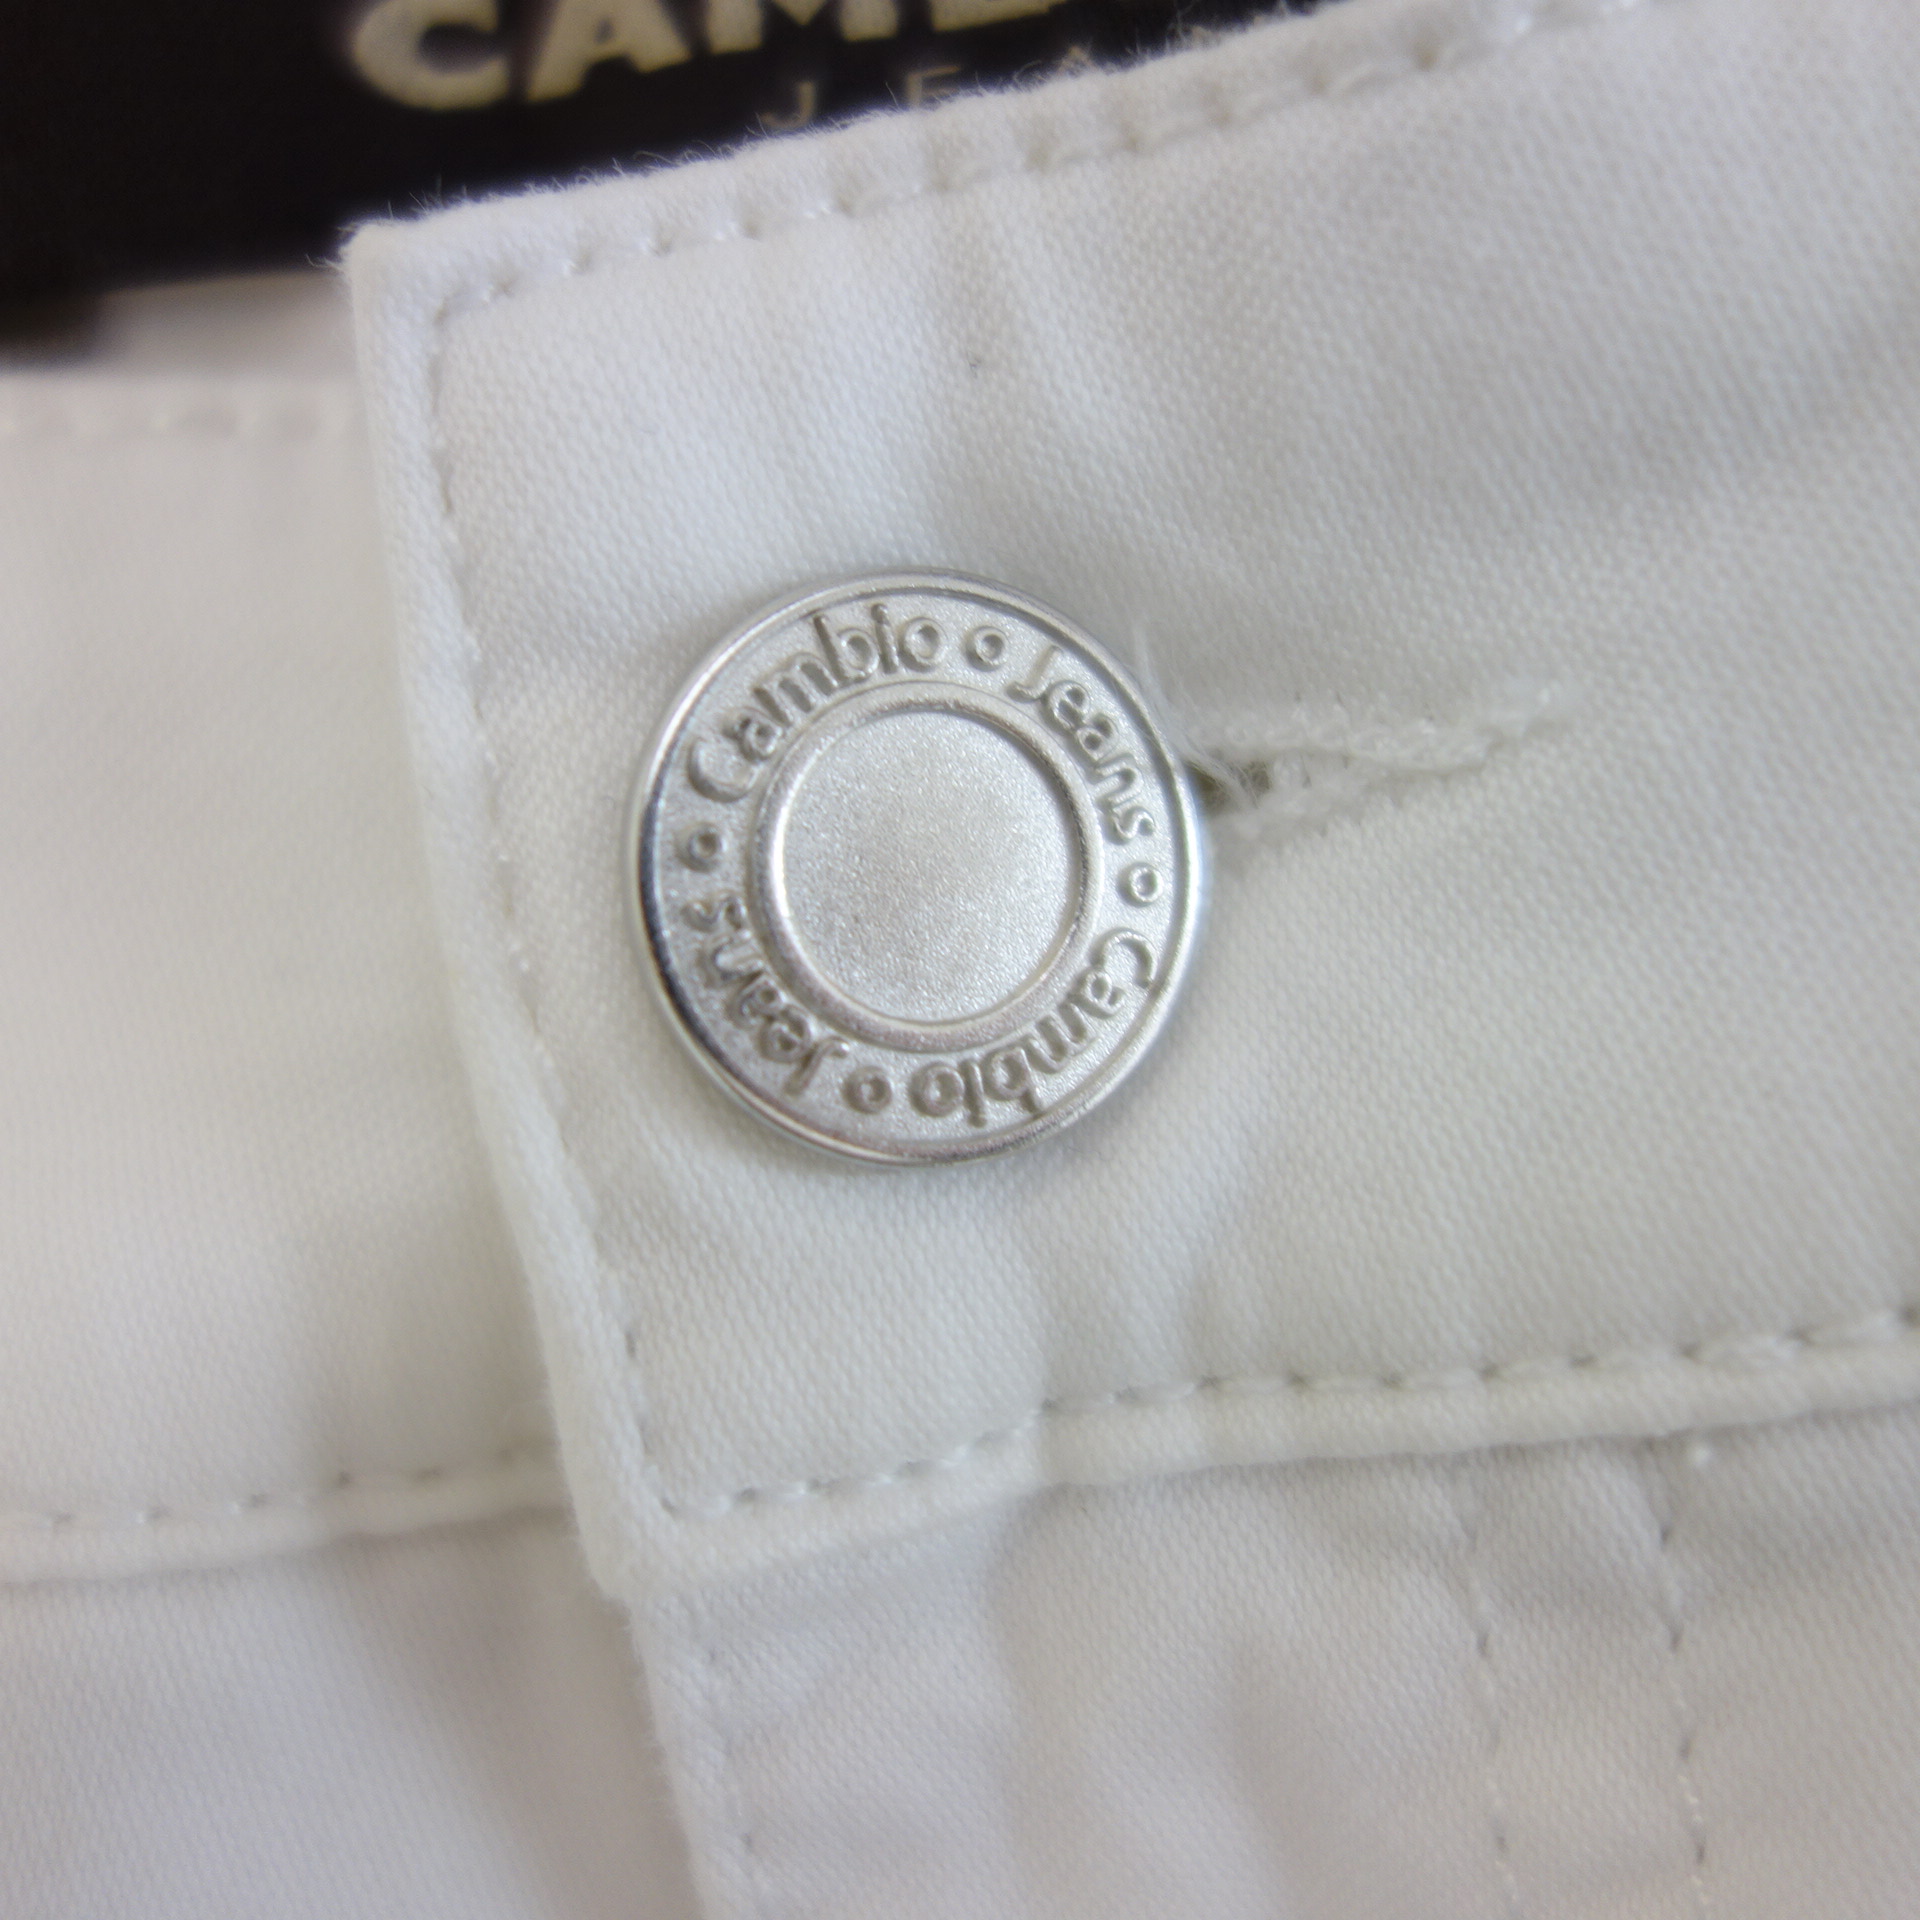 CAMBIO Jeans Hose Damen Modell Parla Zip Weiß Straight Super Stretch